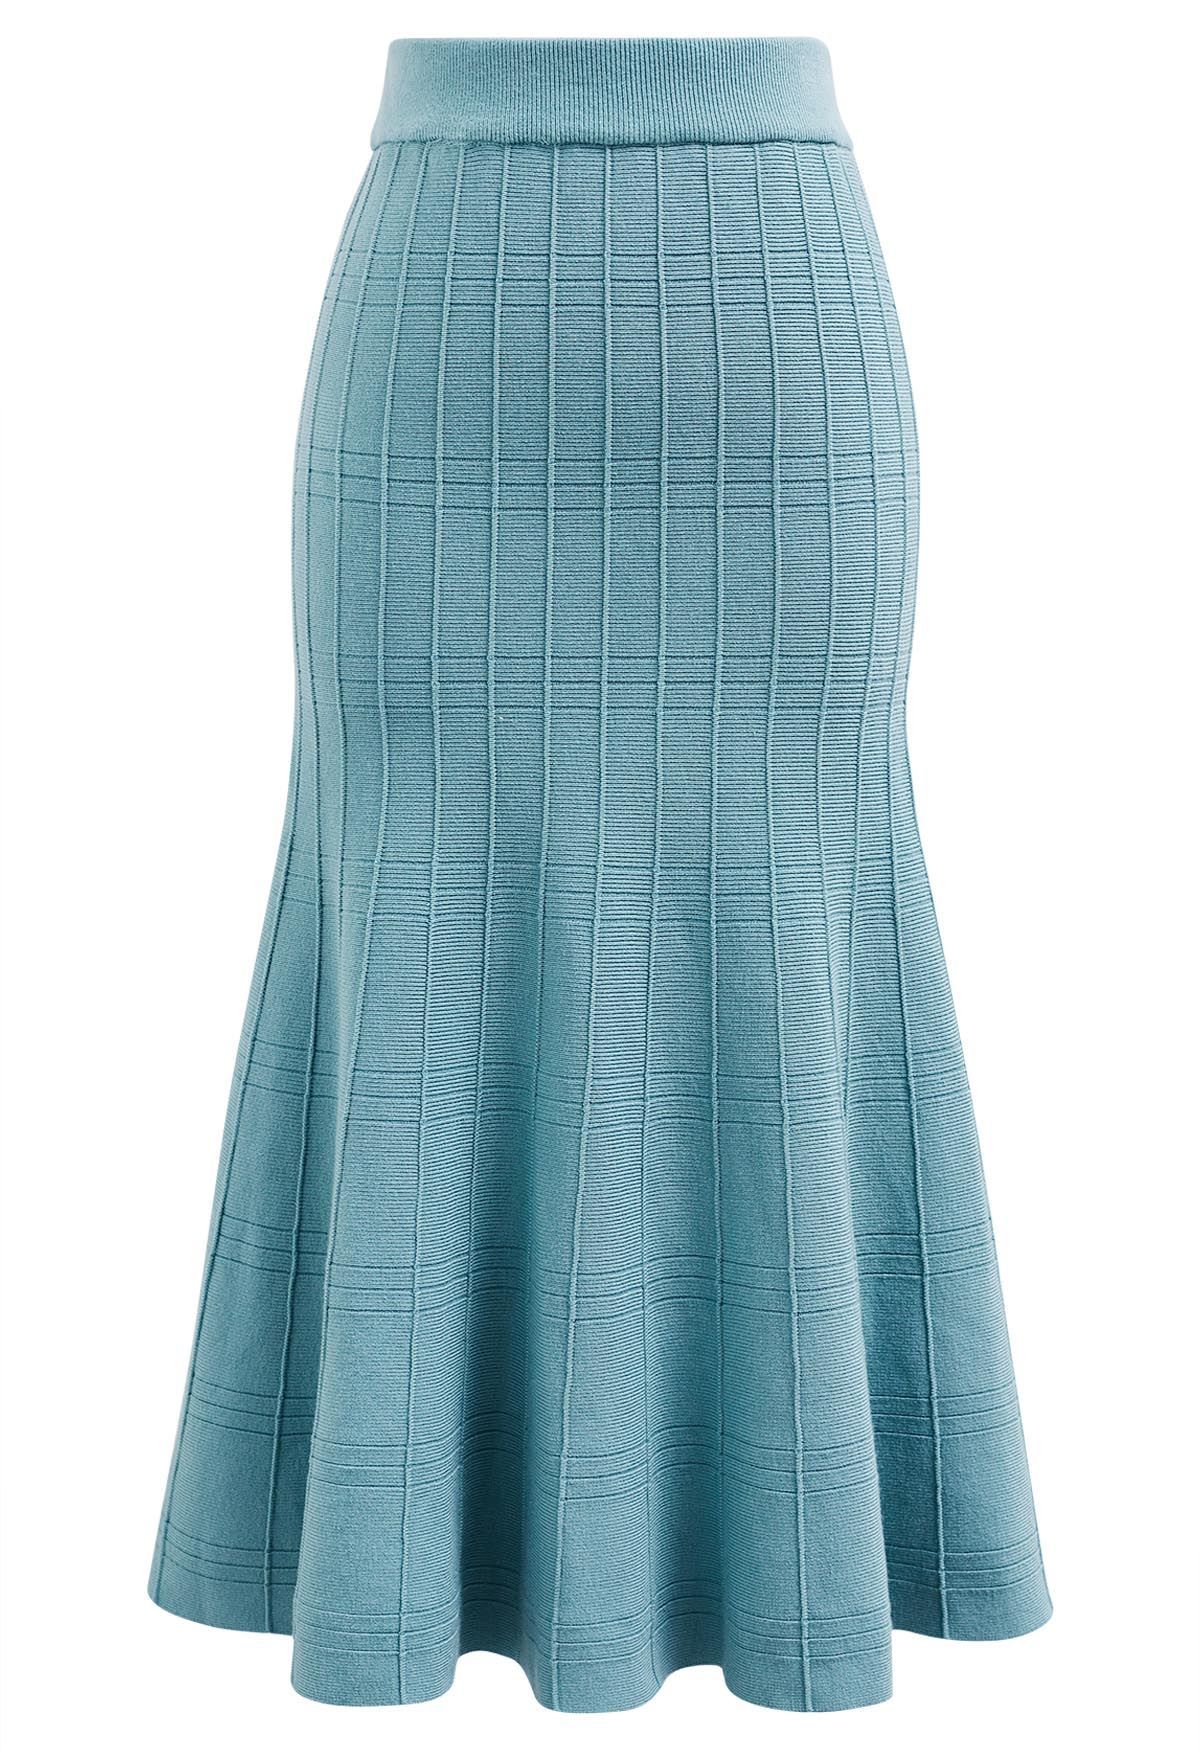 Seam Line Knit Mermaid Skirt in Turquoise | Chicwish